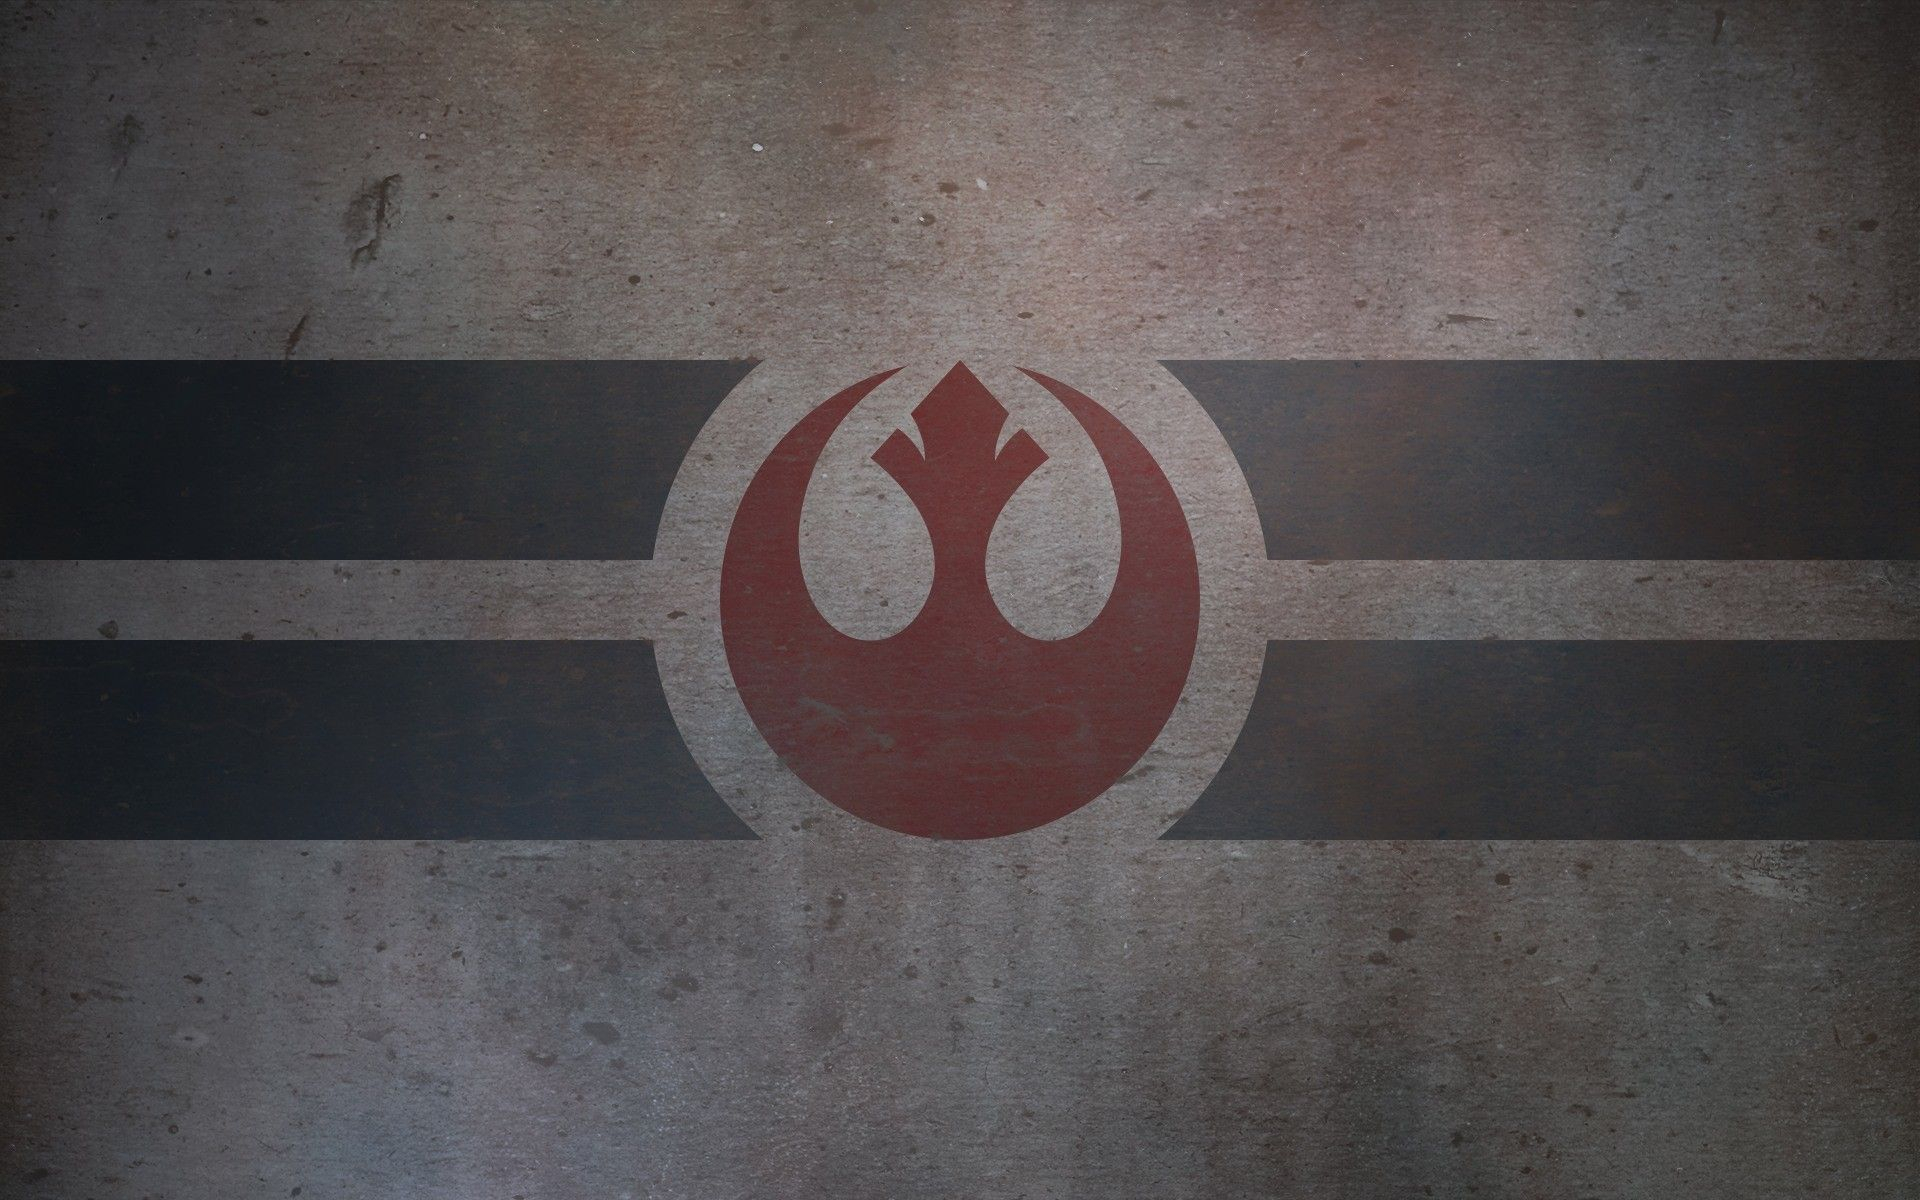 1920x1200 Star Wars Rebel Alliance Wallpapers Top Free Star Wars Rebel Alliance Backgrounds